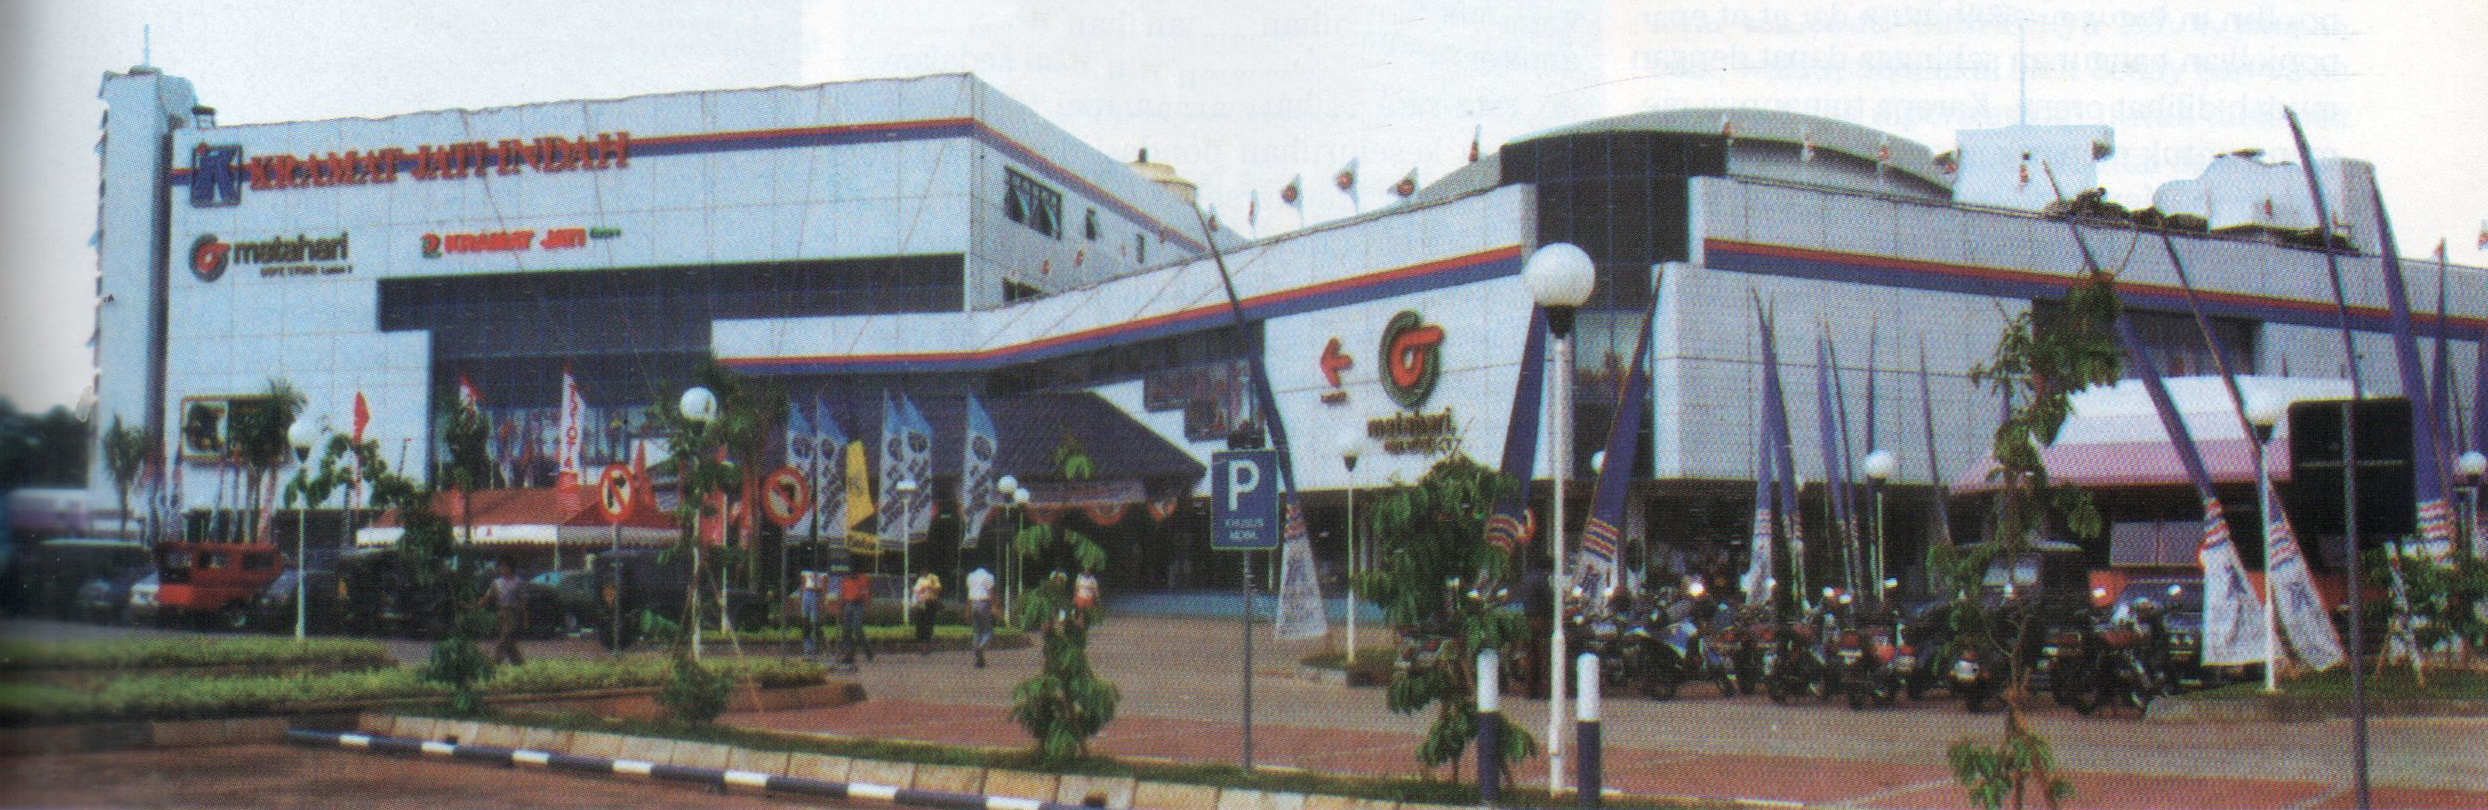 Lippo Plaza Kramat Jati atau Kramat Jati Indah, Jakarta - Juni 1988